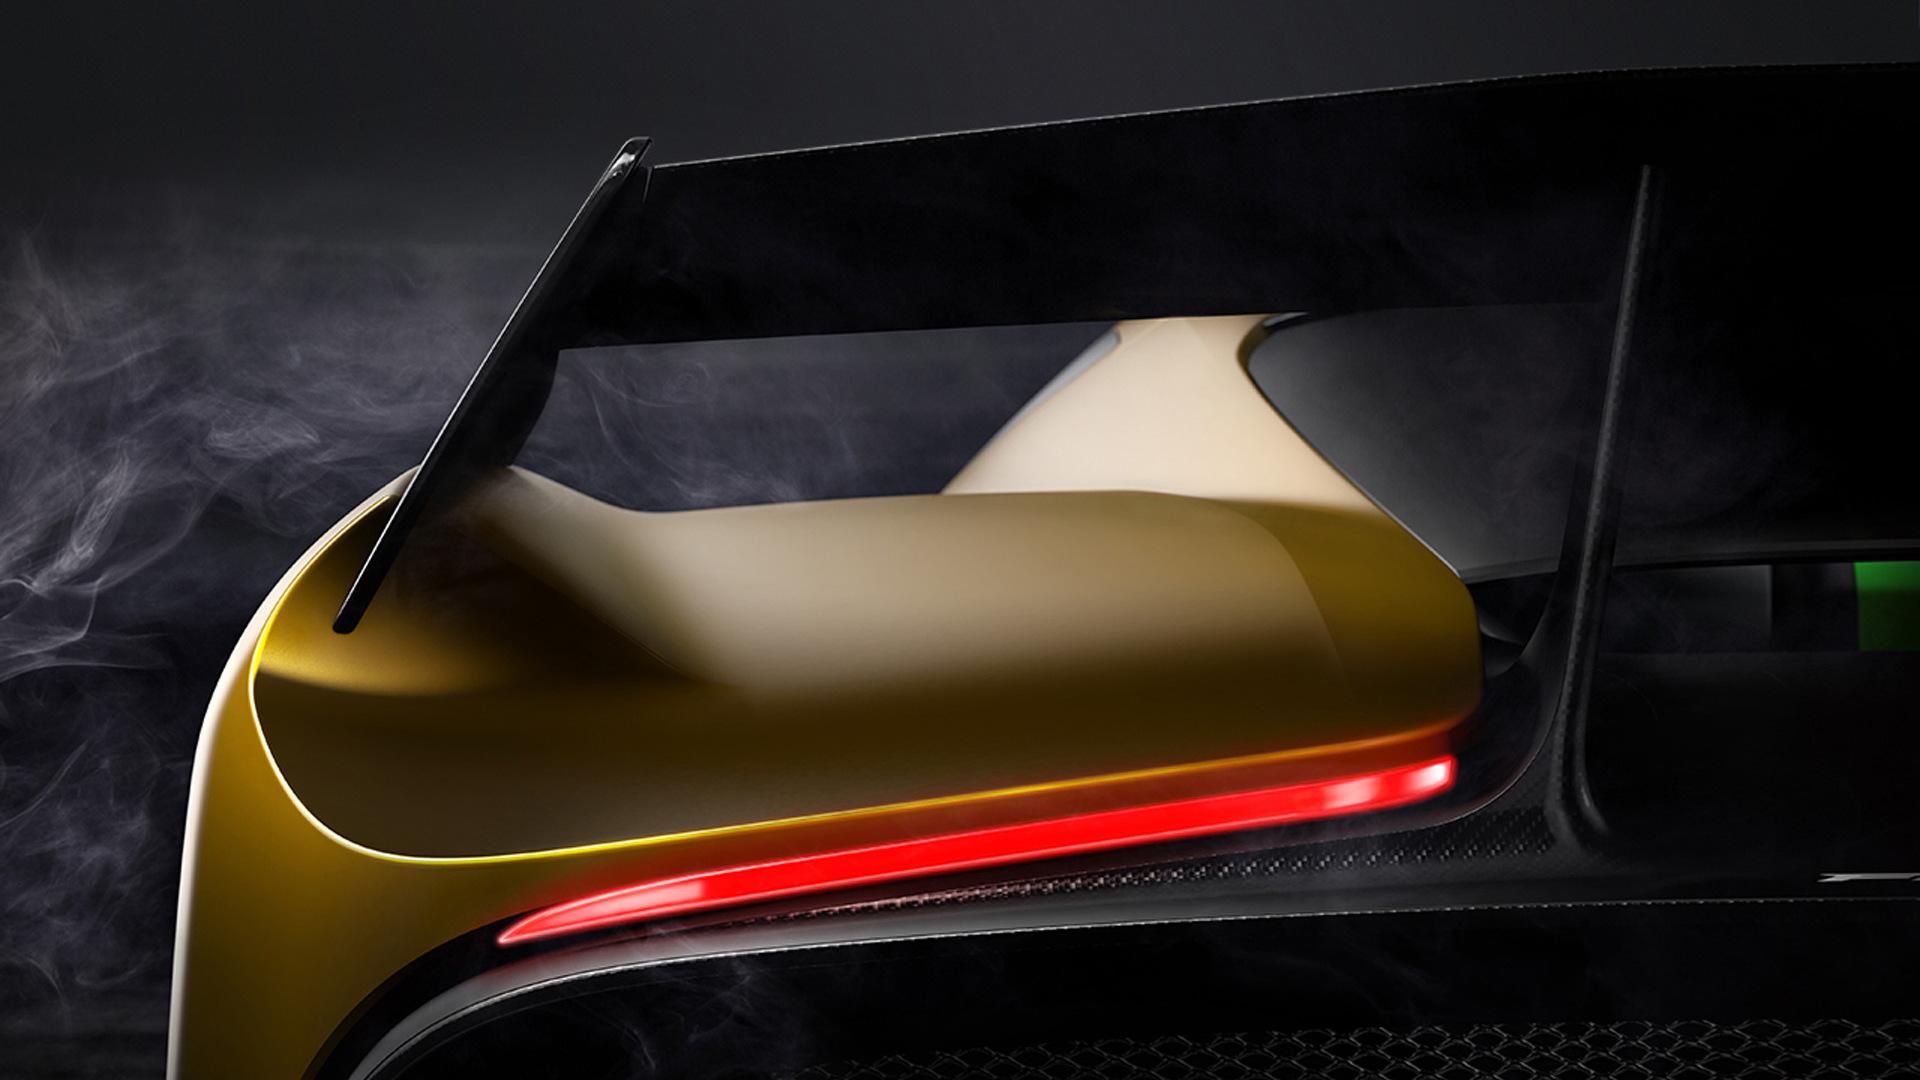 Teaser for Fittipaldi EF7 Vision Gran Turismo by Pininfarina debuting at 2017 Geneva auto show